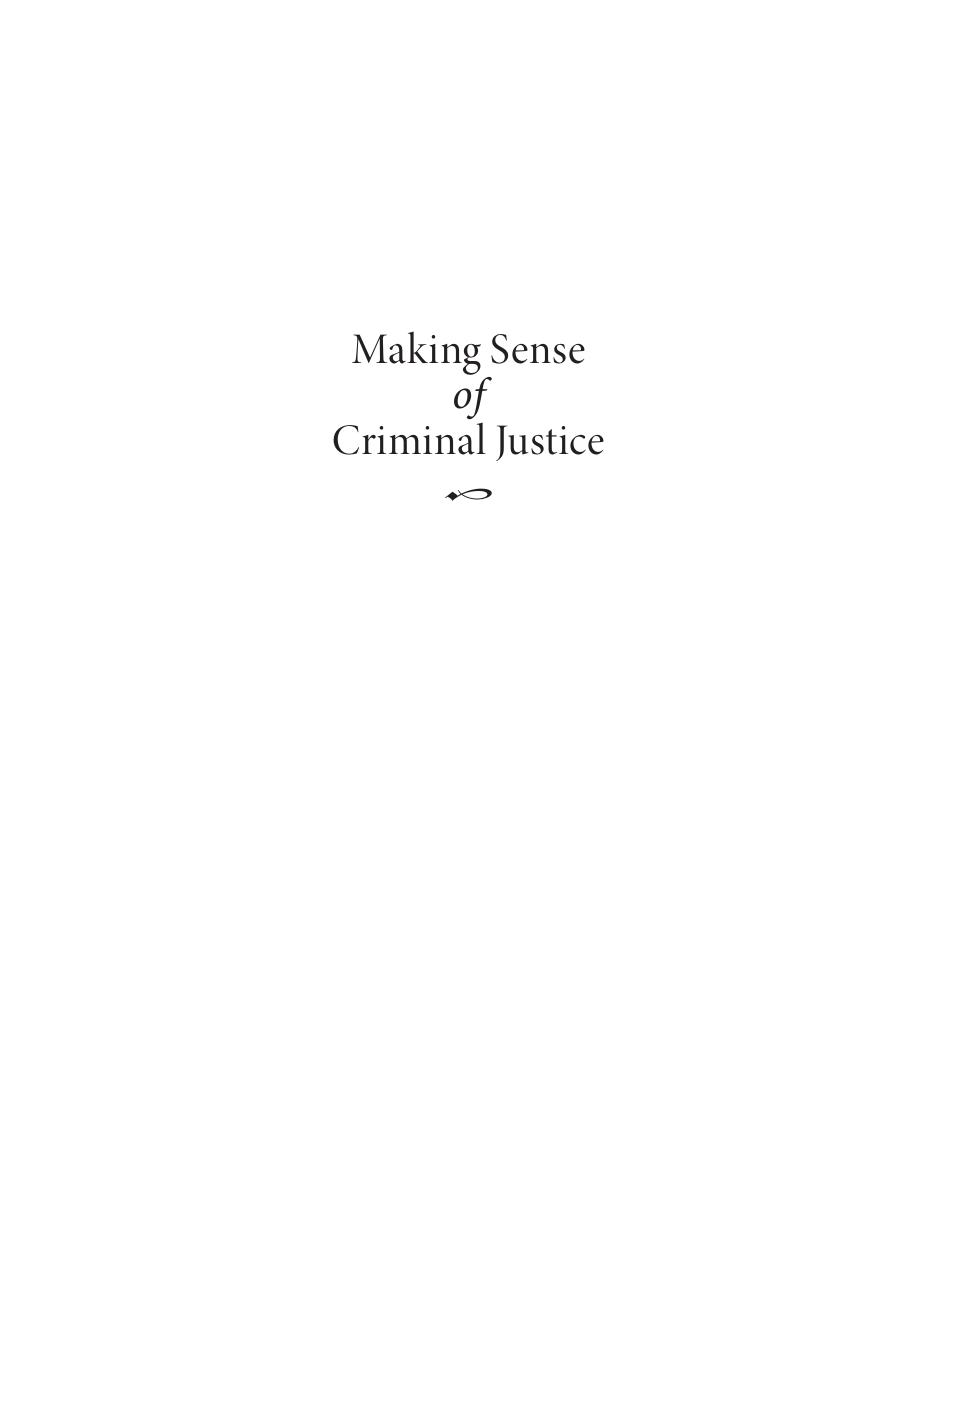 Making Sense of Criminal Justice by G. Larry Mays Rick Ruddell